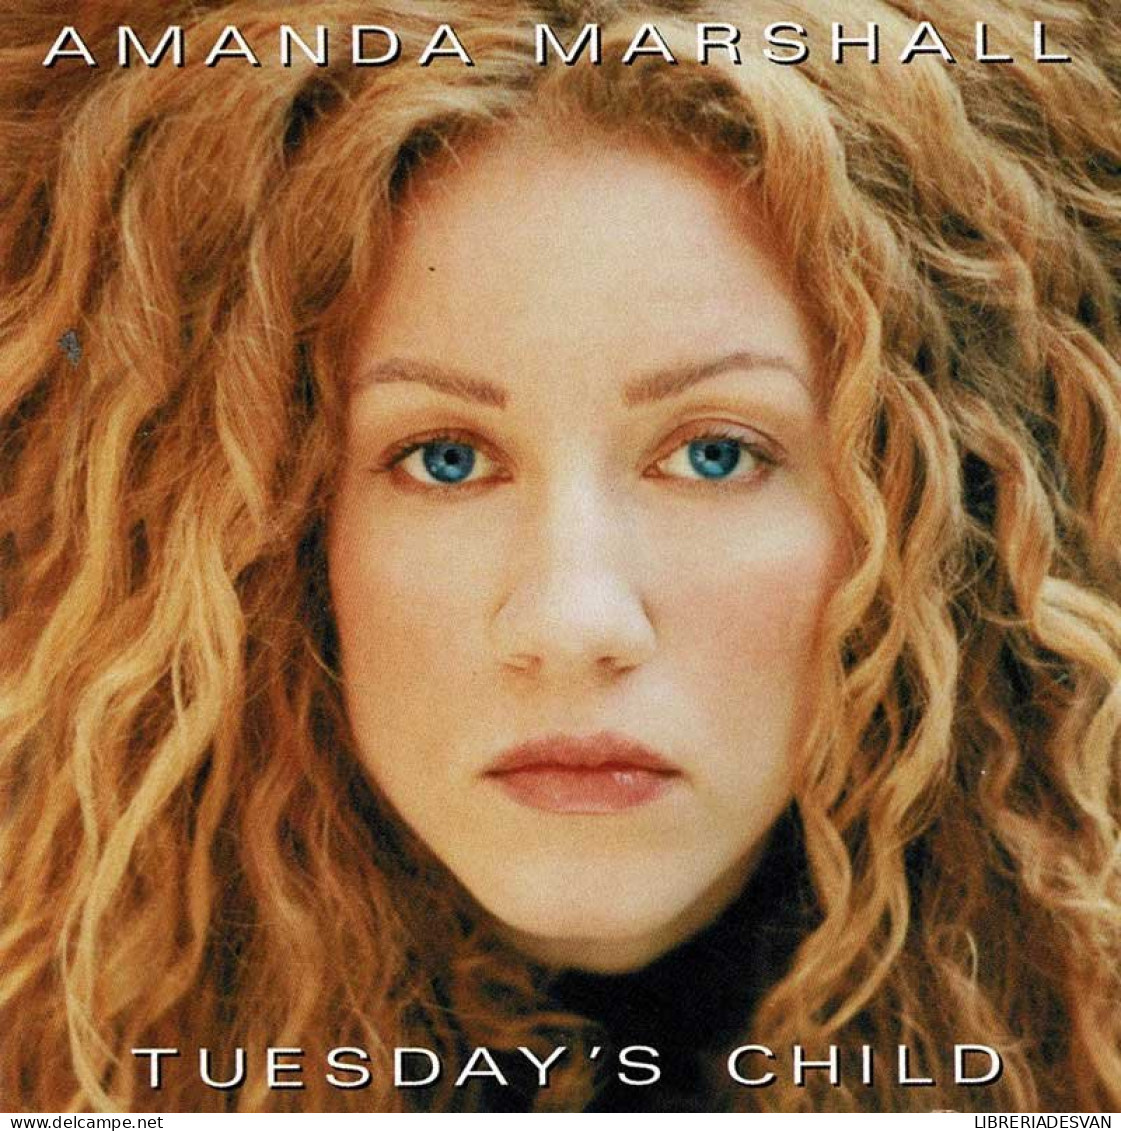 Amanda Marshall - Tuesday's Child. CD - Disco & Pop